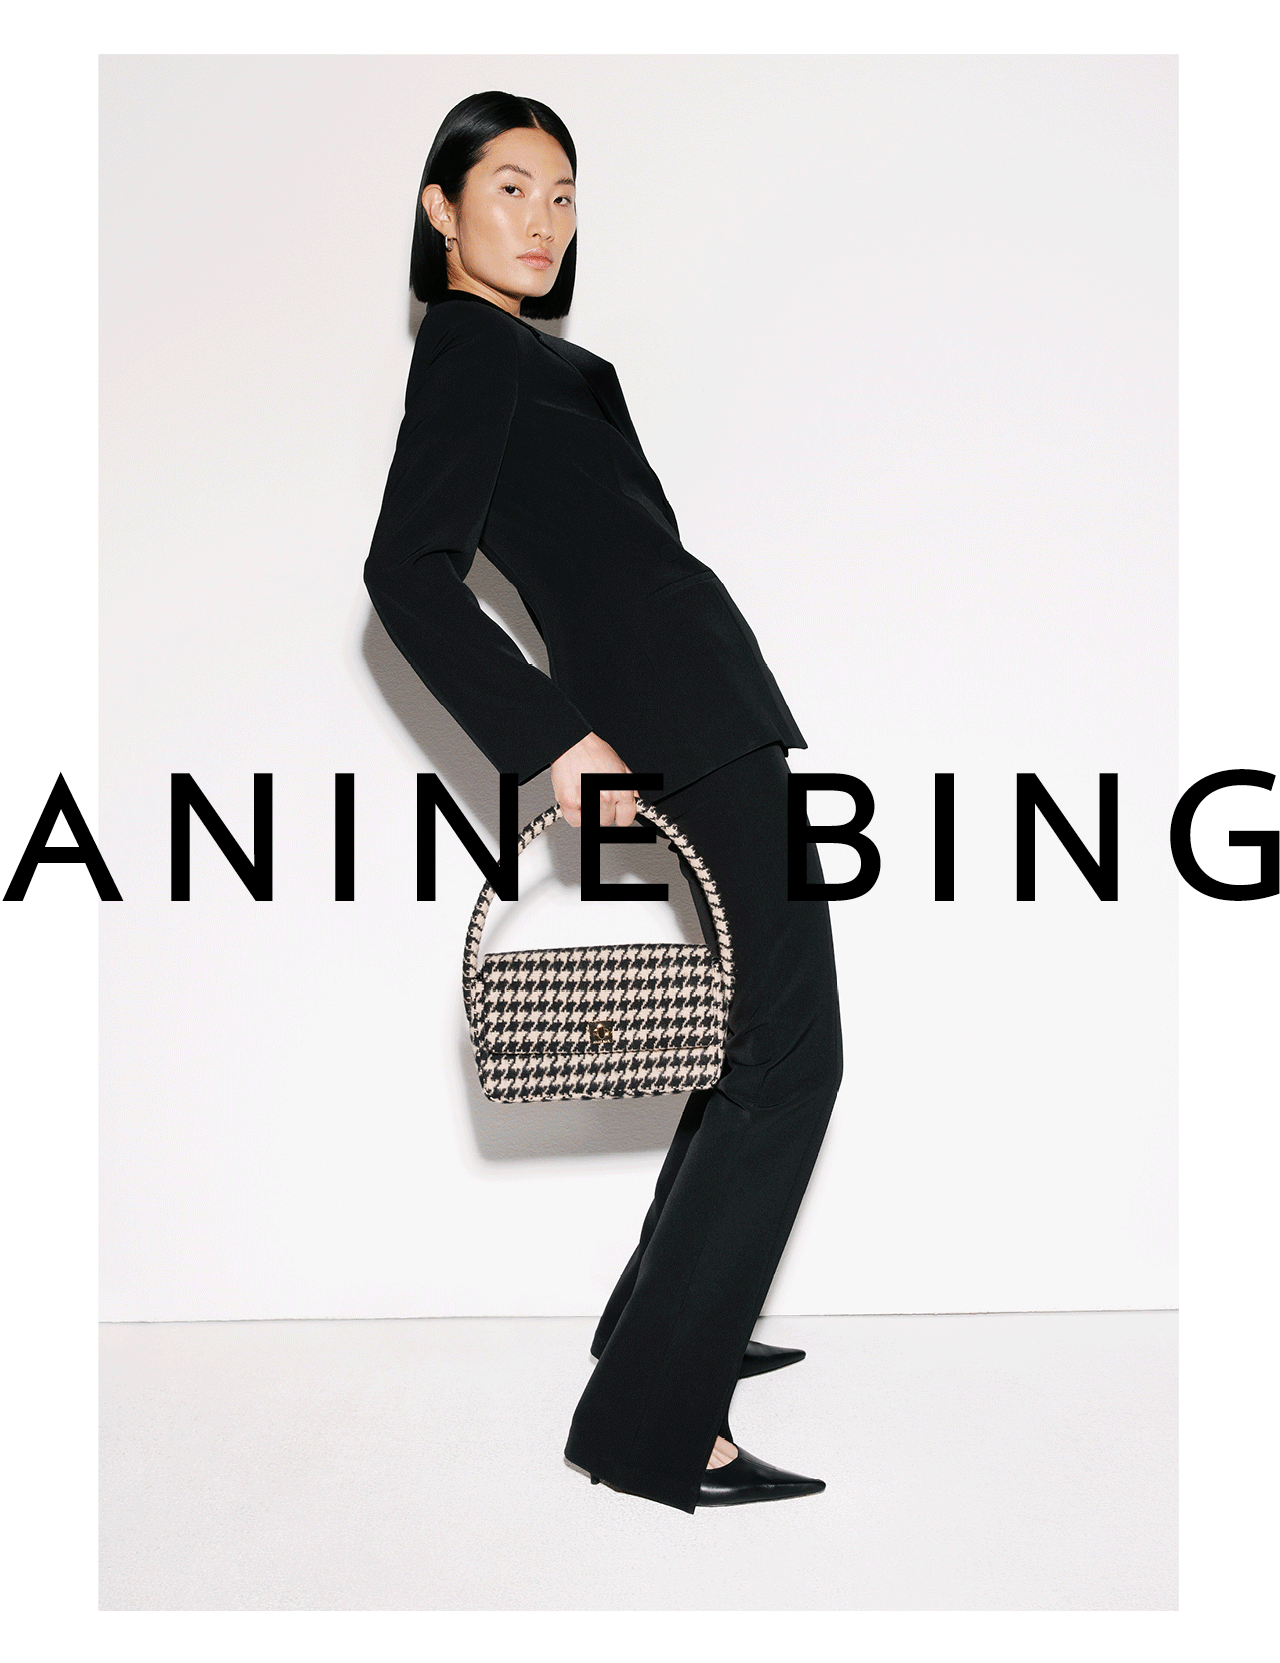 ANINE BING: Introducing the Nico Bag